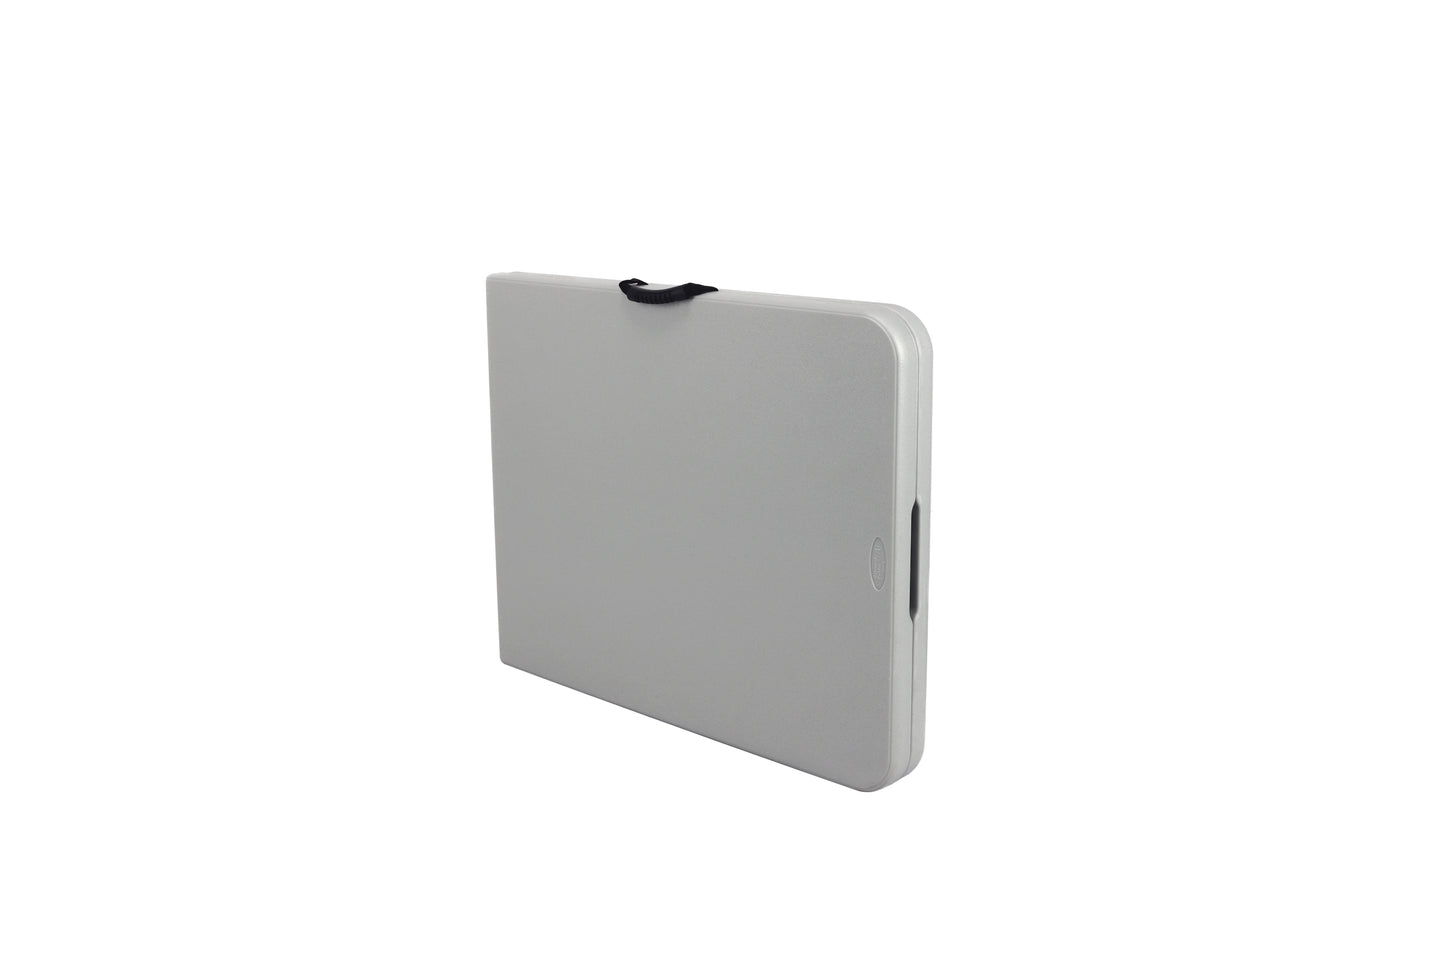 NPS Comfort Max Rectangular Fold-In-Half Plastic Picnic Table 30" W x 96" L x 29.5" H (CMFIH3096)